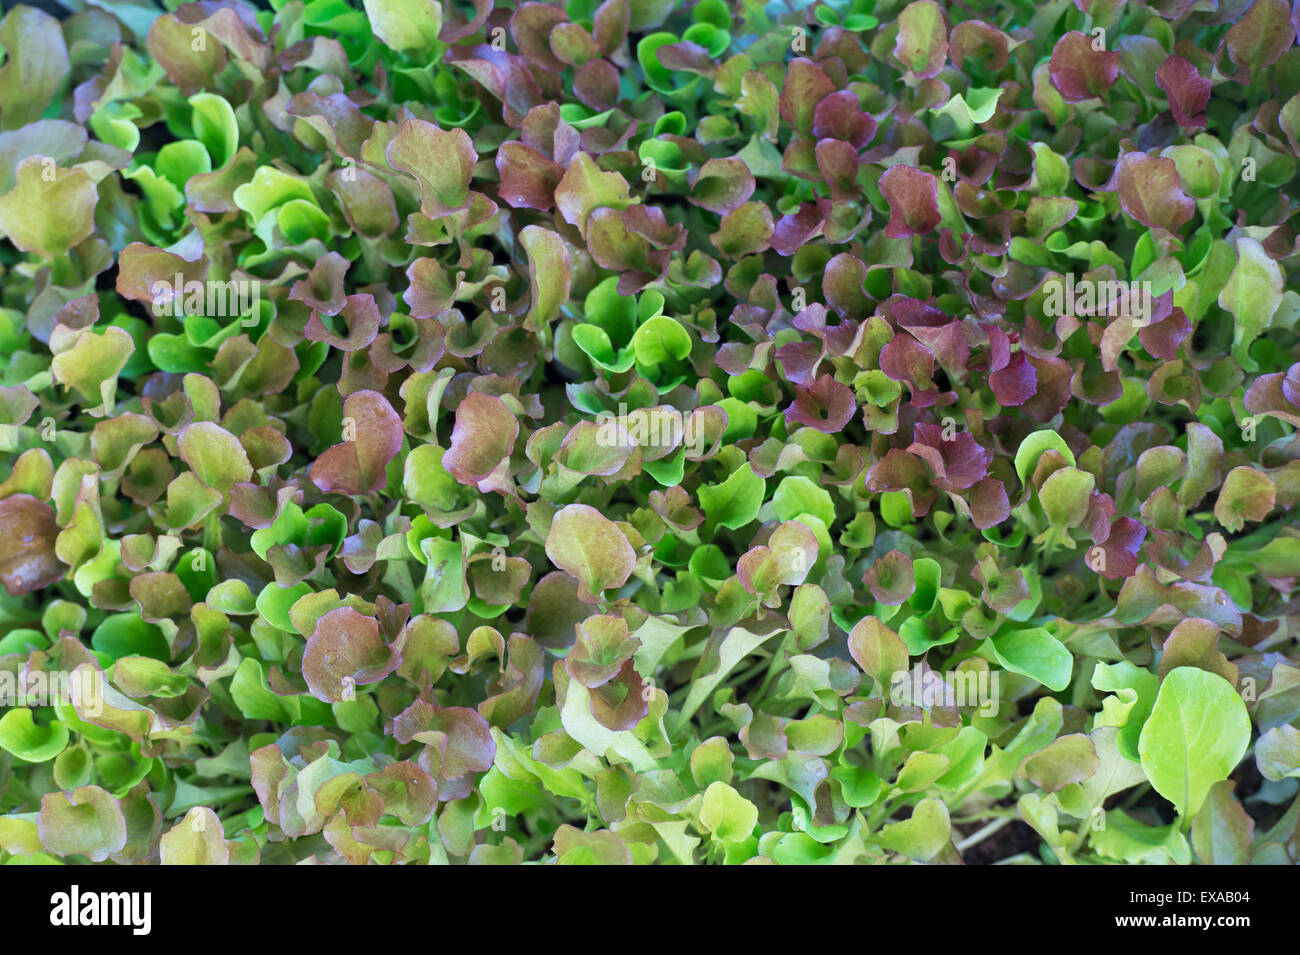 Ensalada mixta deja crecer en un jardín de vegetales Foto de stock